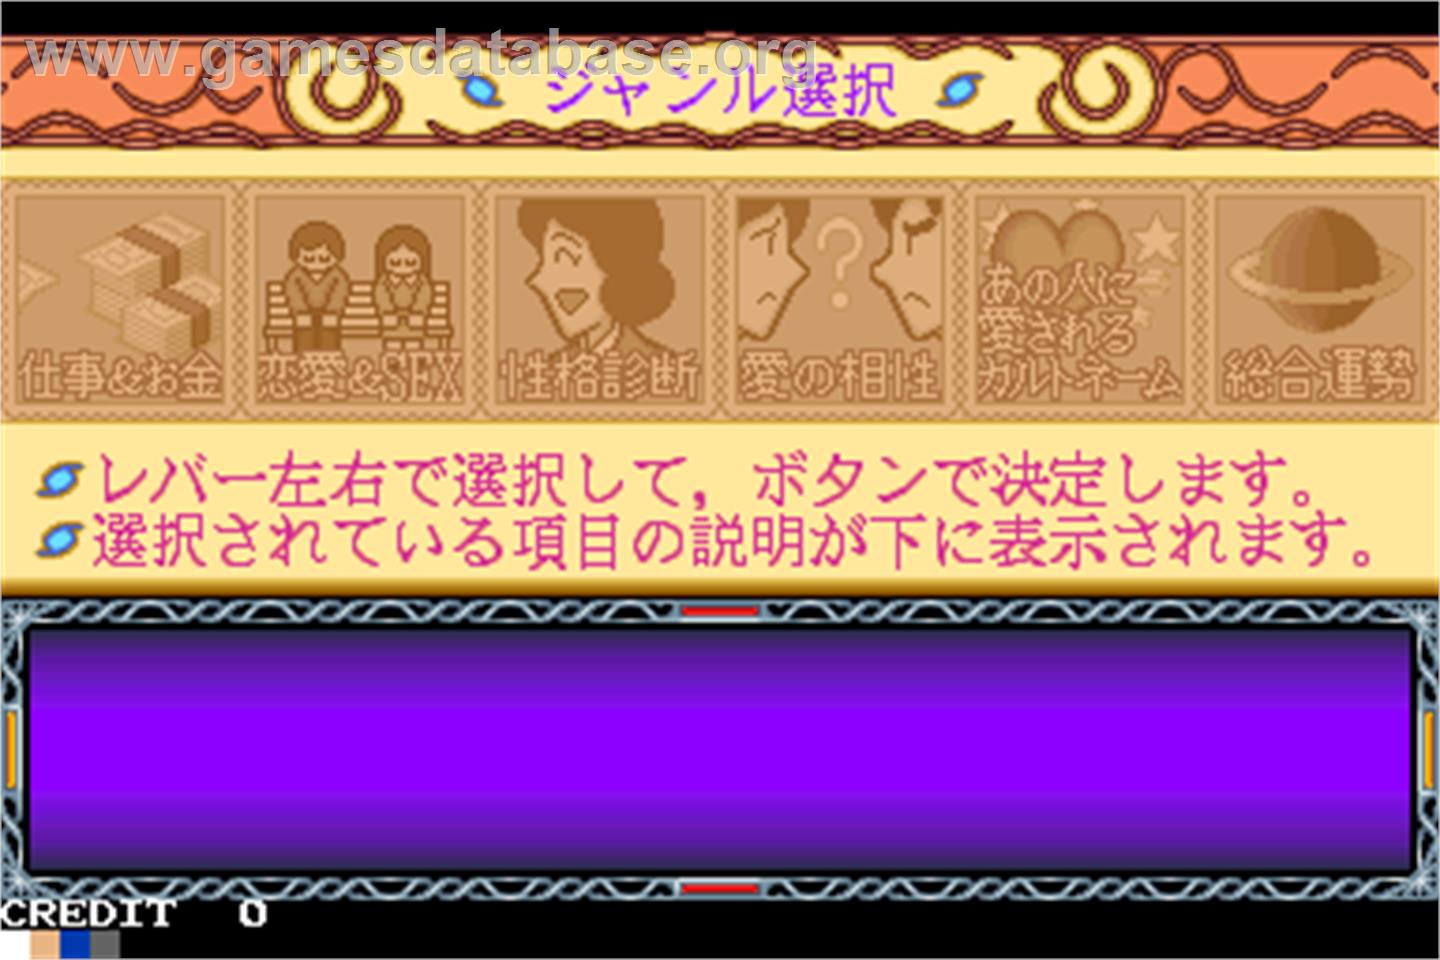 Seimei-Kantei-Meimei-Ki Cult Name - Arcade - Artwork - In Game